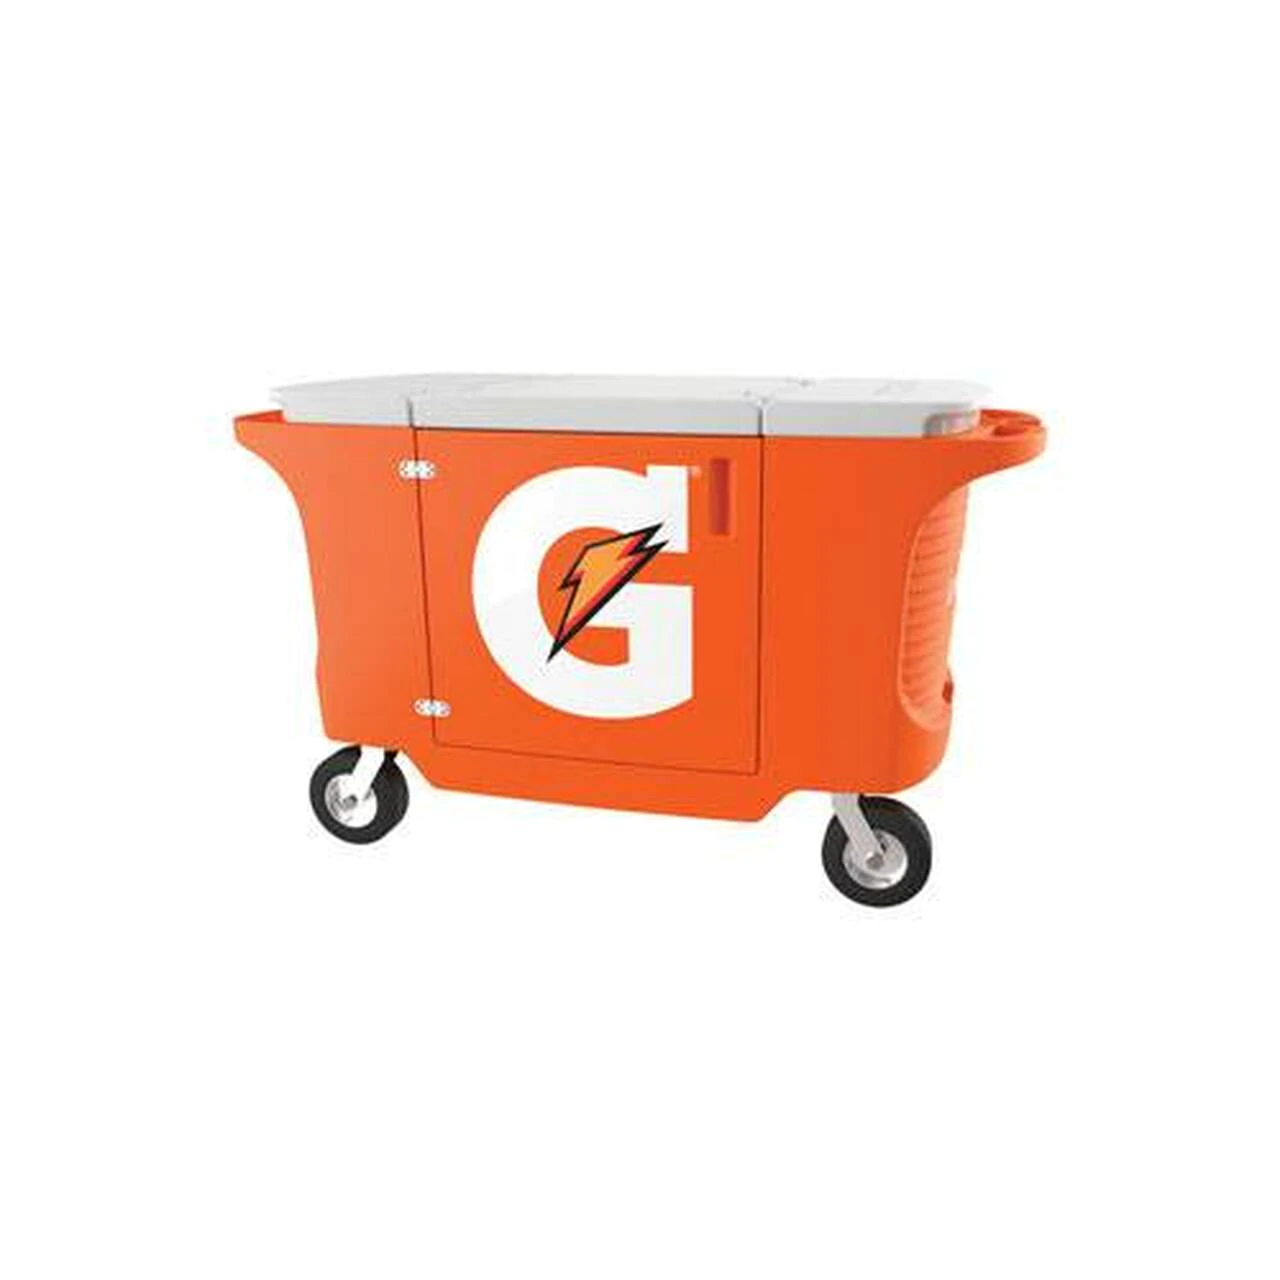 Gatorade Sideline Stadium Cooler cart